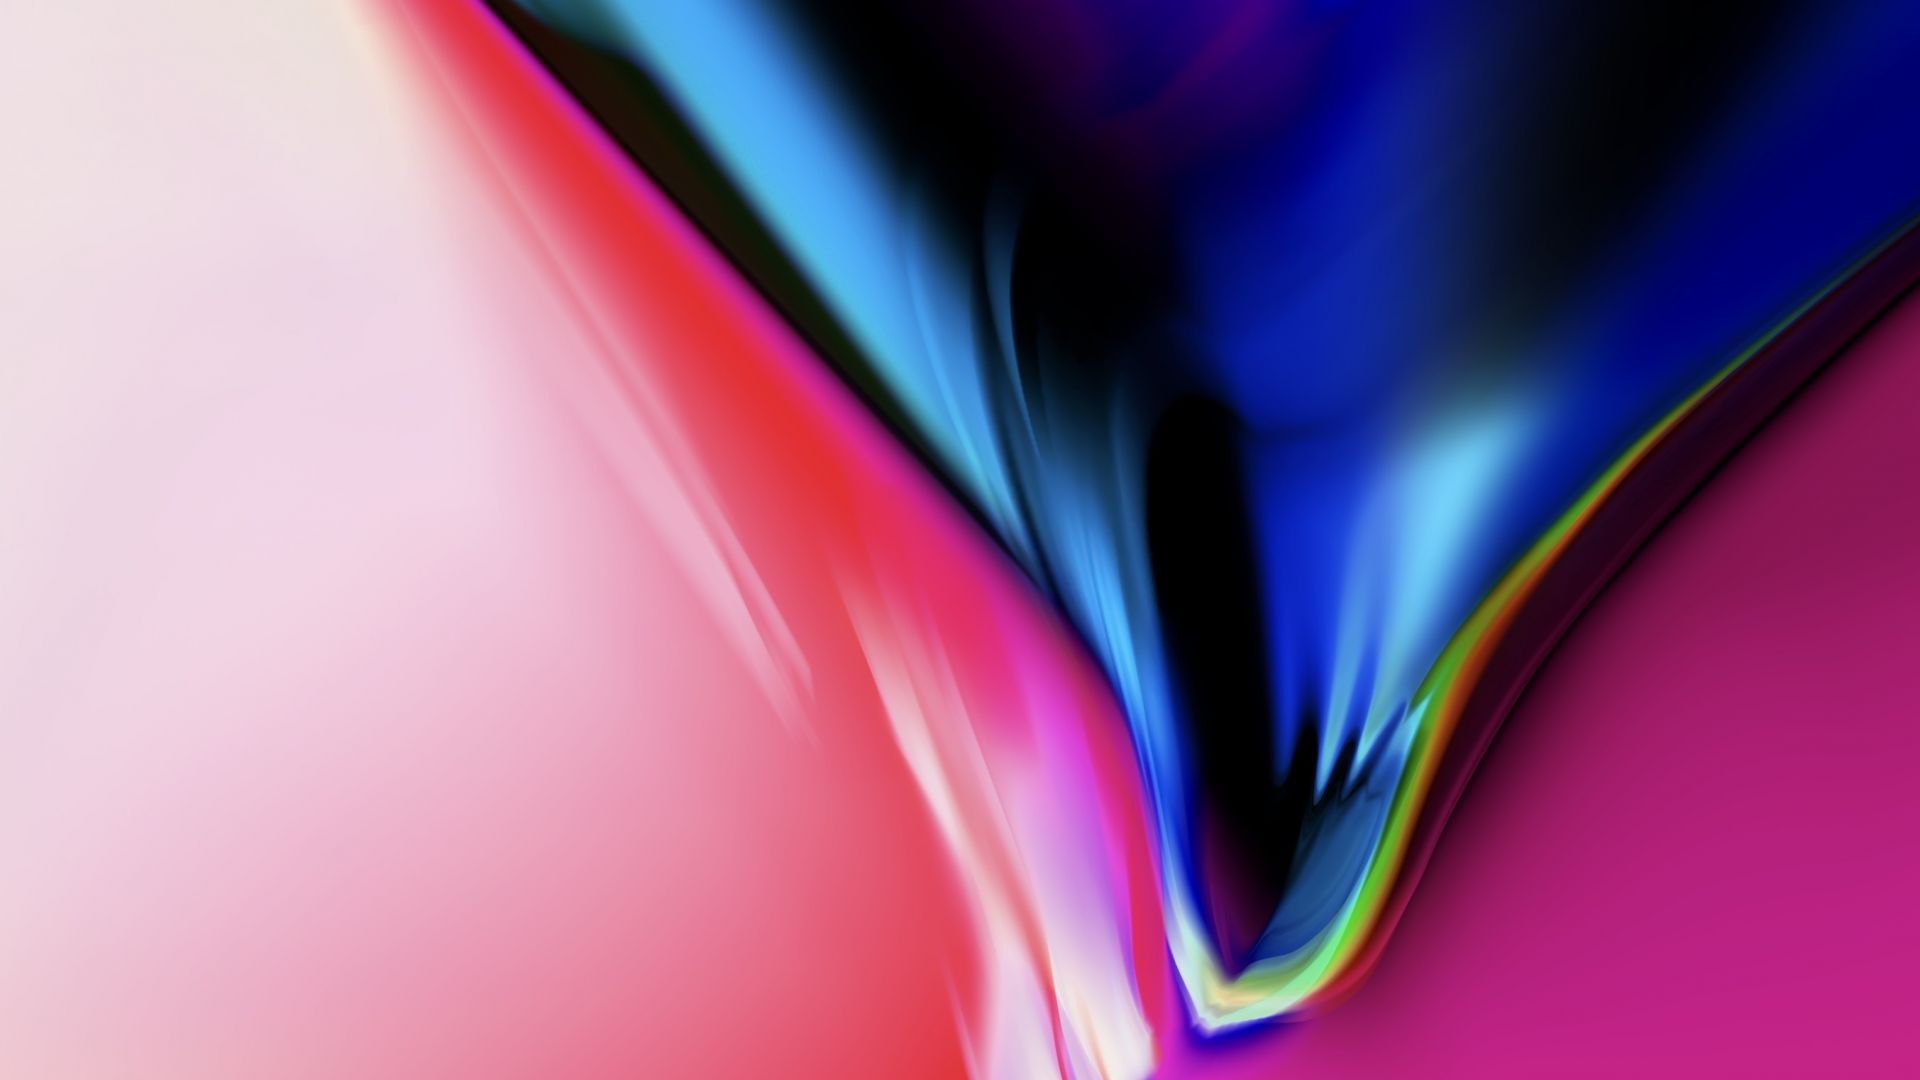 iPhone X wallpaper, iPhone 8, iOS 11, colorful, HD (horizontal)